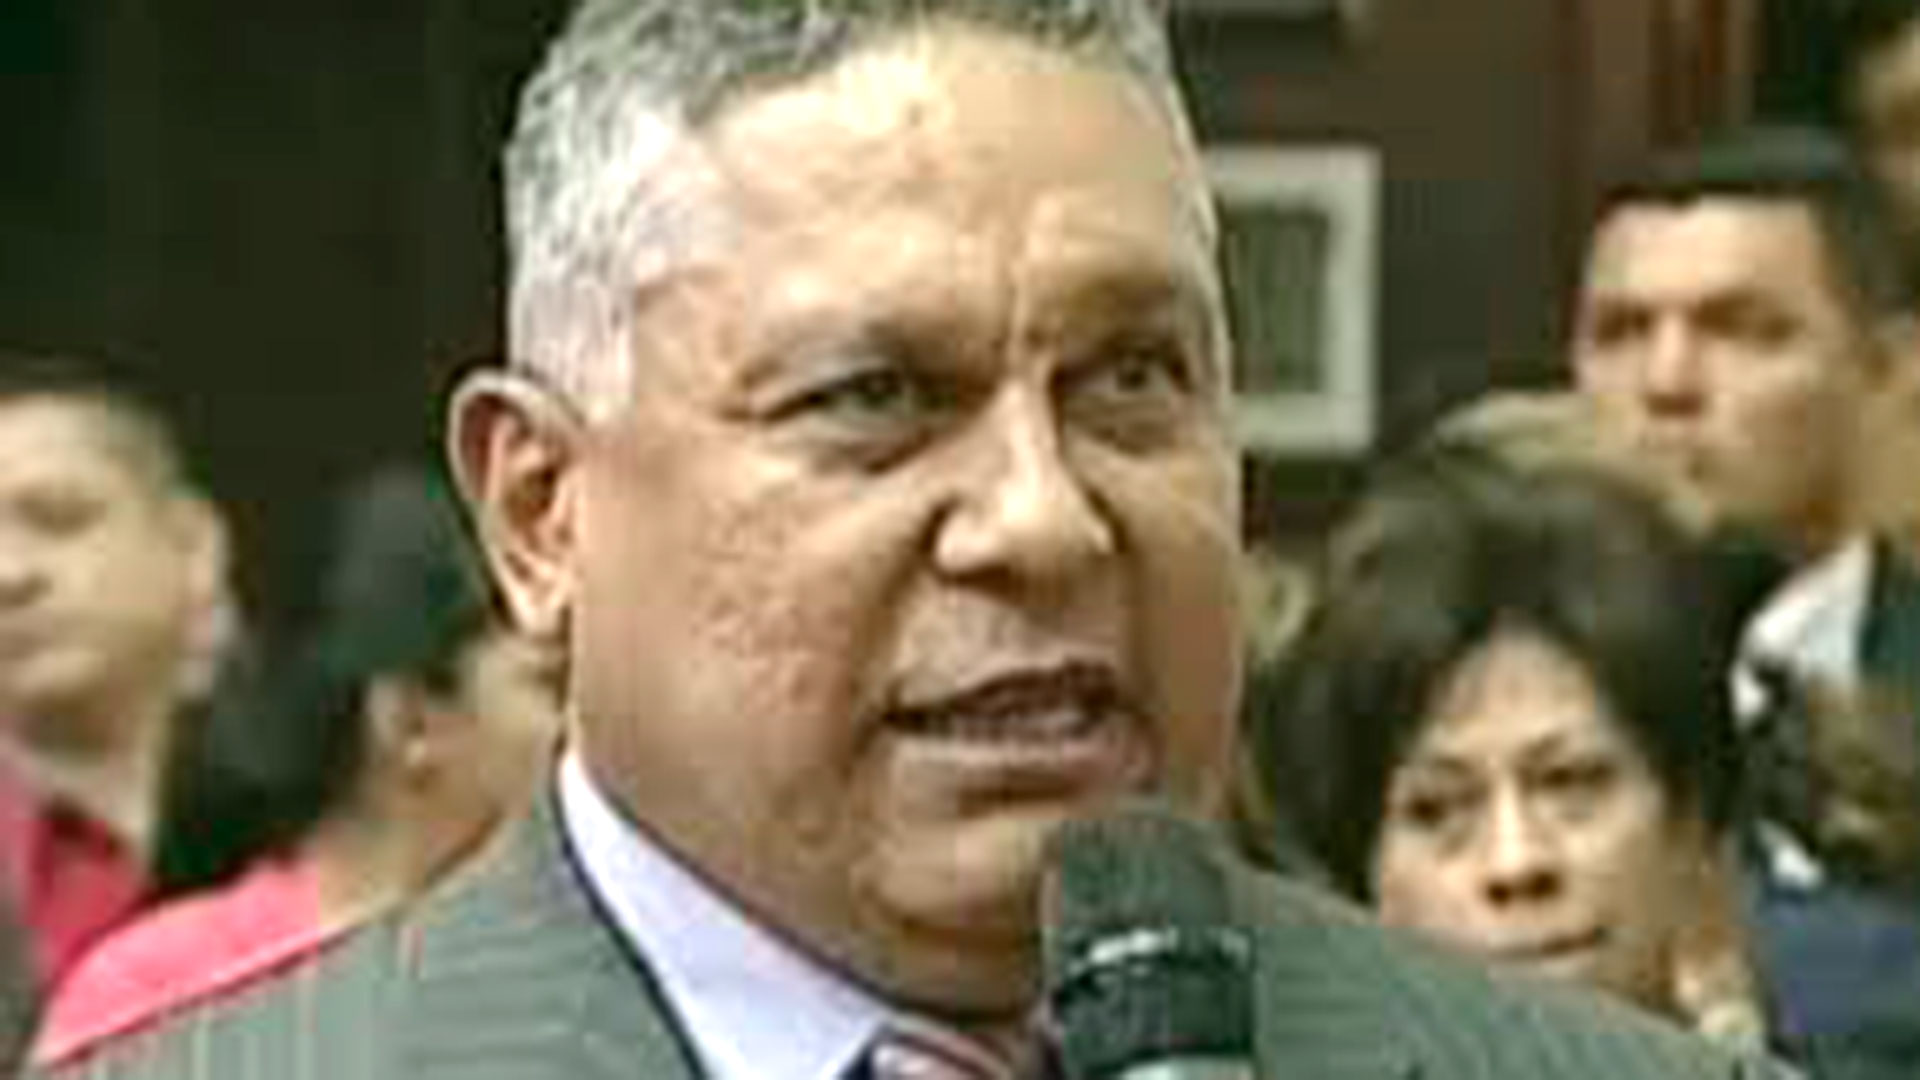 Pedro Carreño